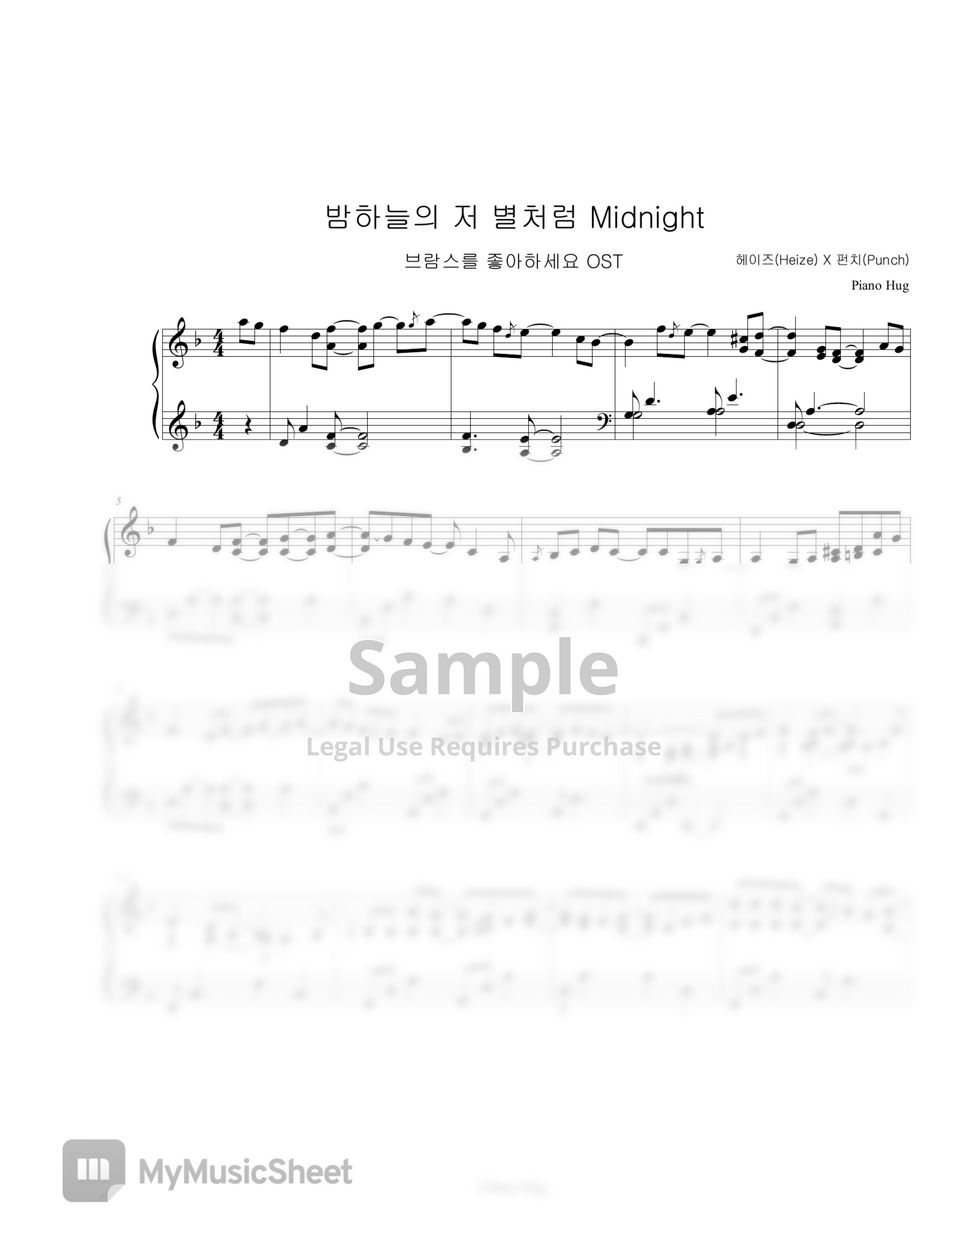 Heize(헤이즈) X Punch(펀치) - Midnight (밤하늘의 저 별처럼) by Piano Hug